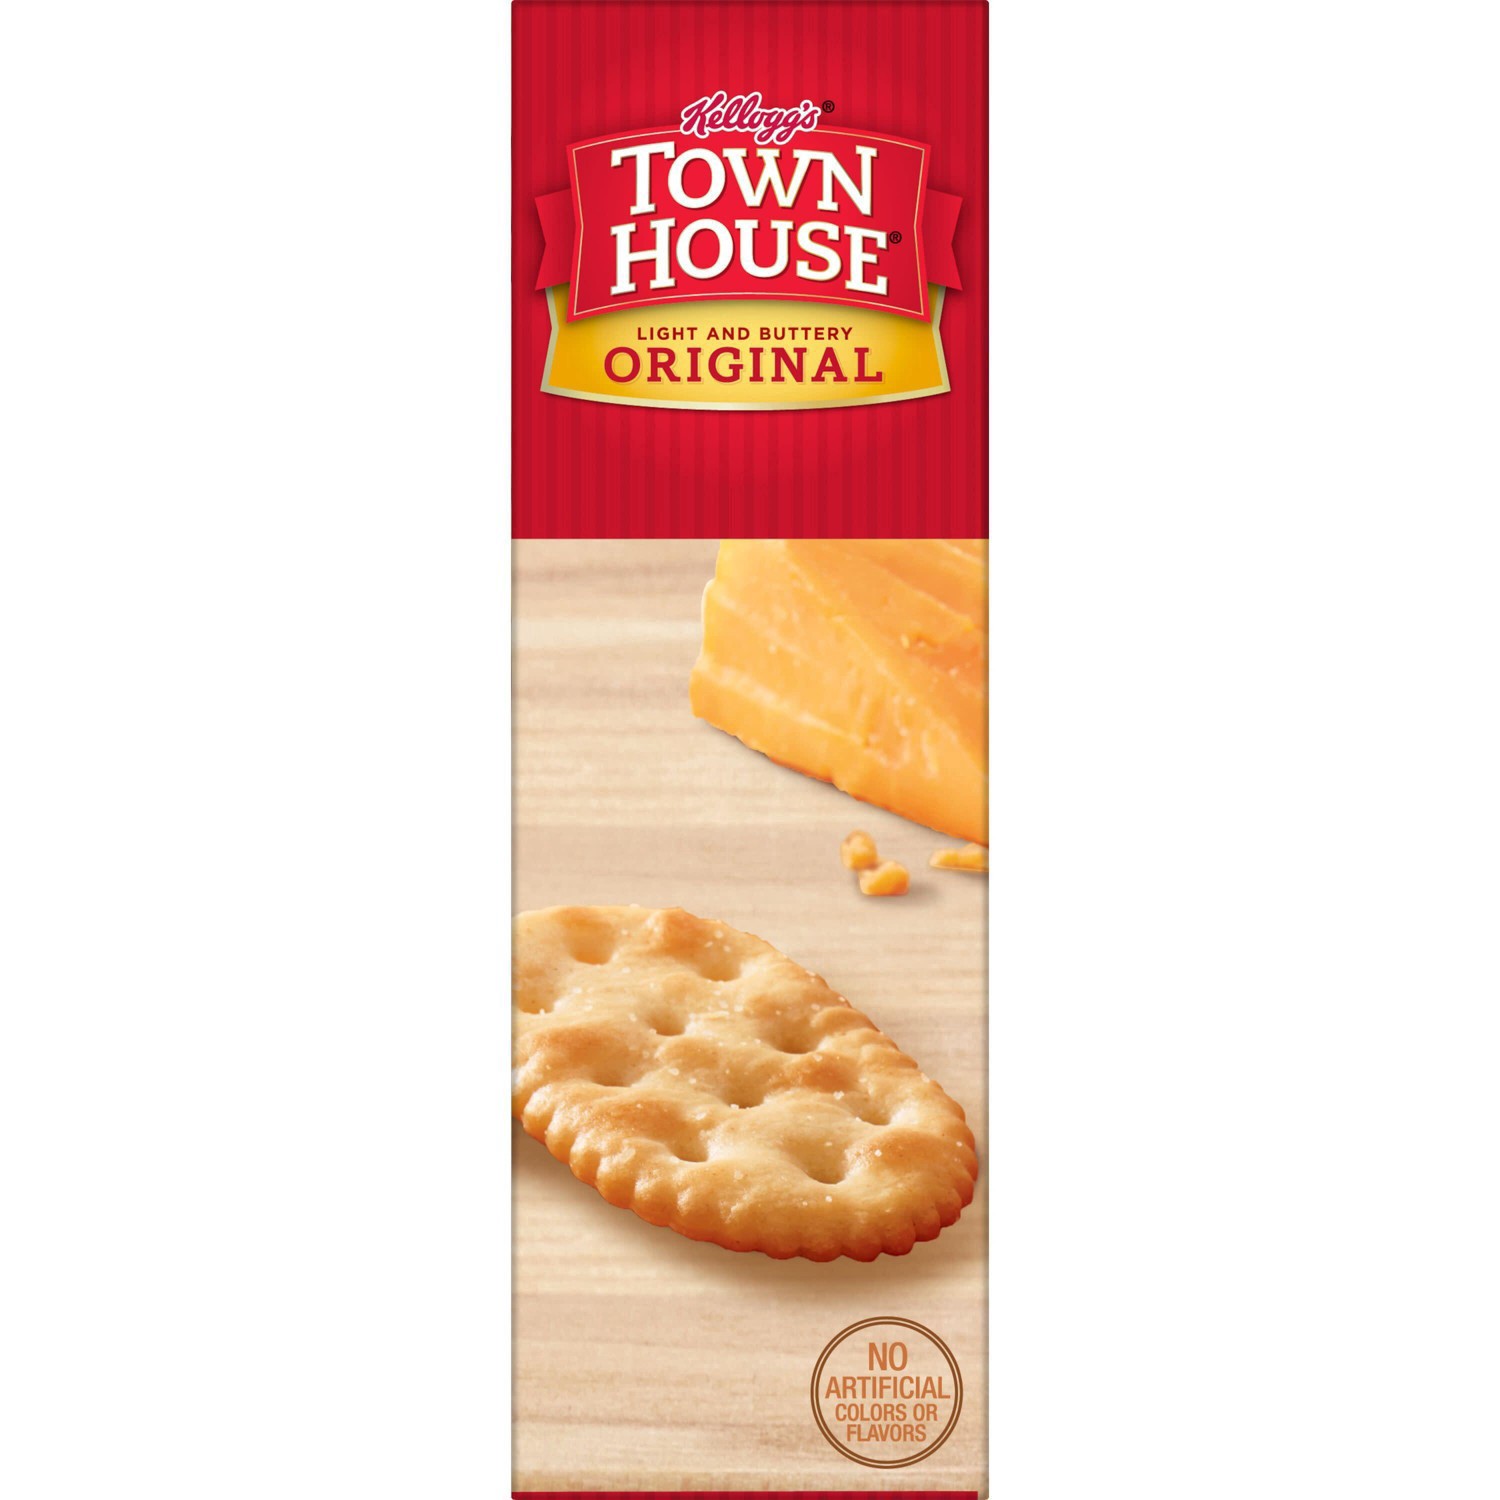 slide 26 of 101, Town House Kellogg's Town House Original Snack Crackers - 13.8oz, 13.8 oz